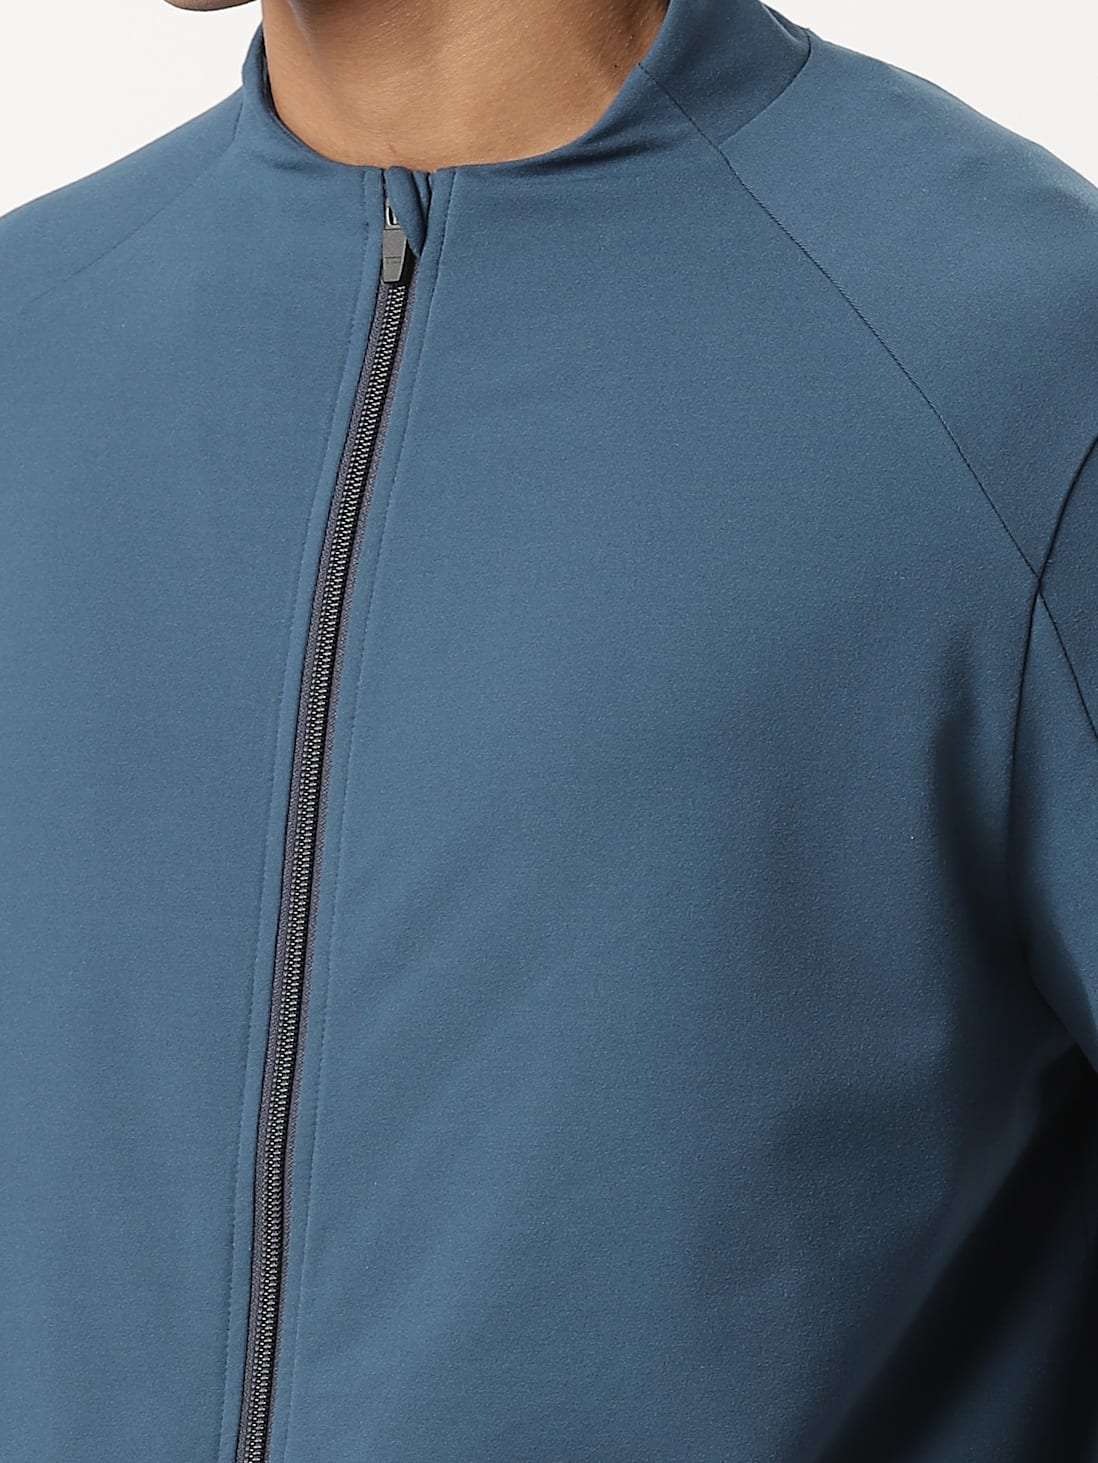 Buy Men's Soft Touch Microfiber Elastane Stretch Thumbhole Jacket with ...